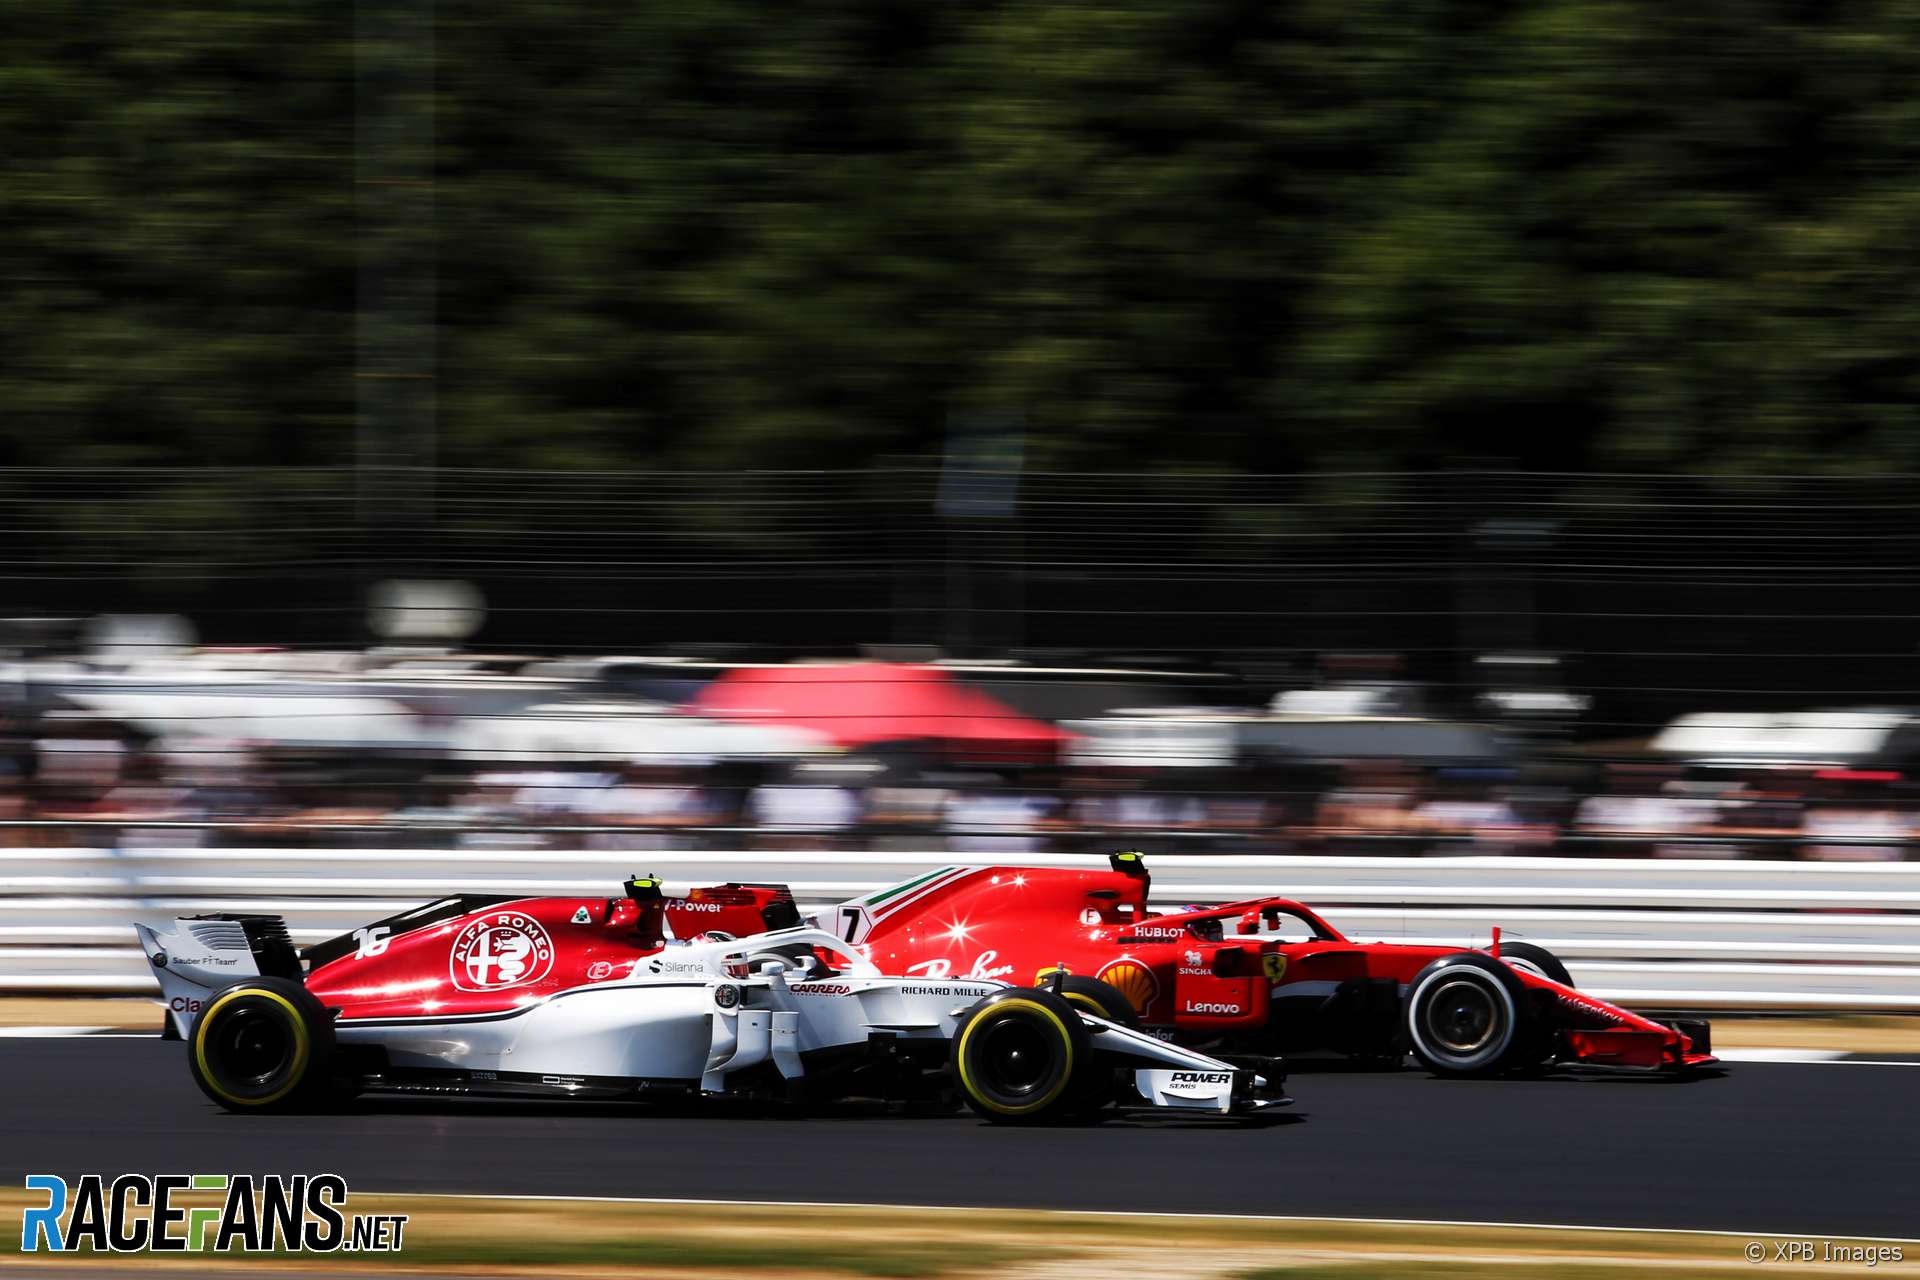 Kimi Raikkonen, Charles Leclerc, Silverstone, 2018